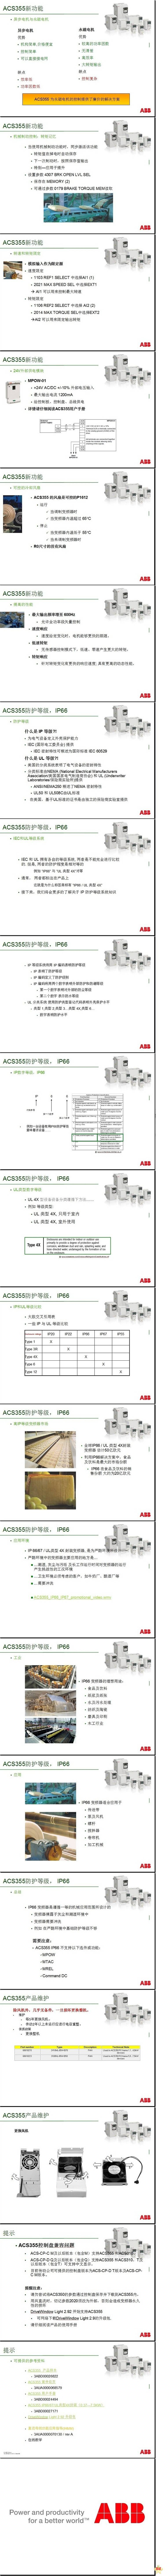 ABB 变频器 机械传动 三相 220V ACS355-03E-02A4-2 变频器,机械传动,微型传动,ACS355,ABB